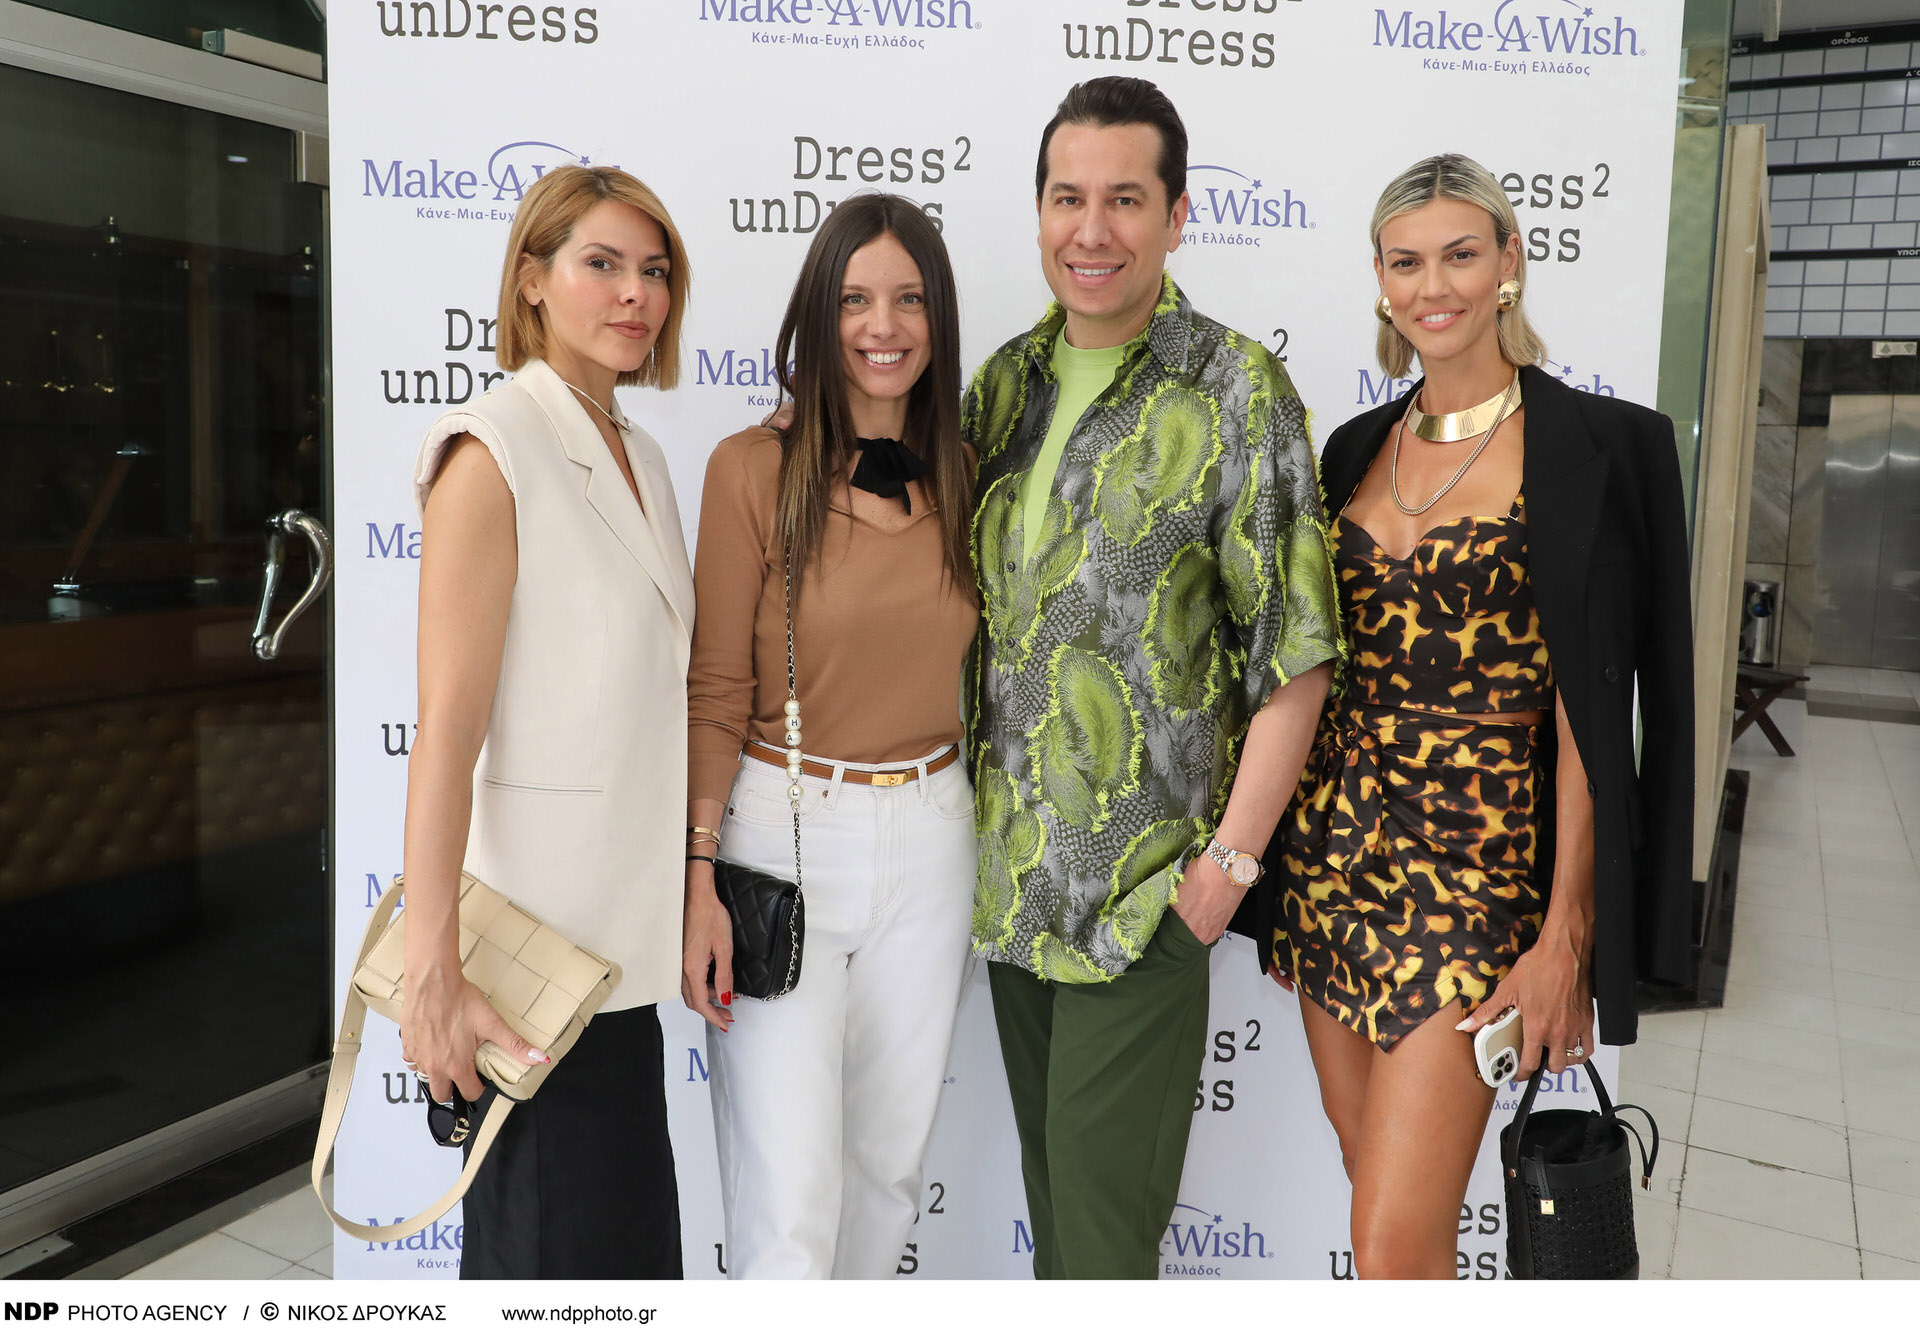 "Dress2unDress - Make A Wish": Το charity event της γνωστής εταιρείας ένδυσης της Νατάσας Αποστολοπούλου